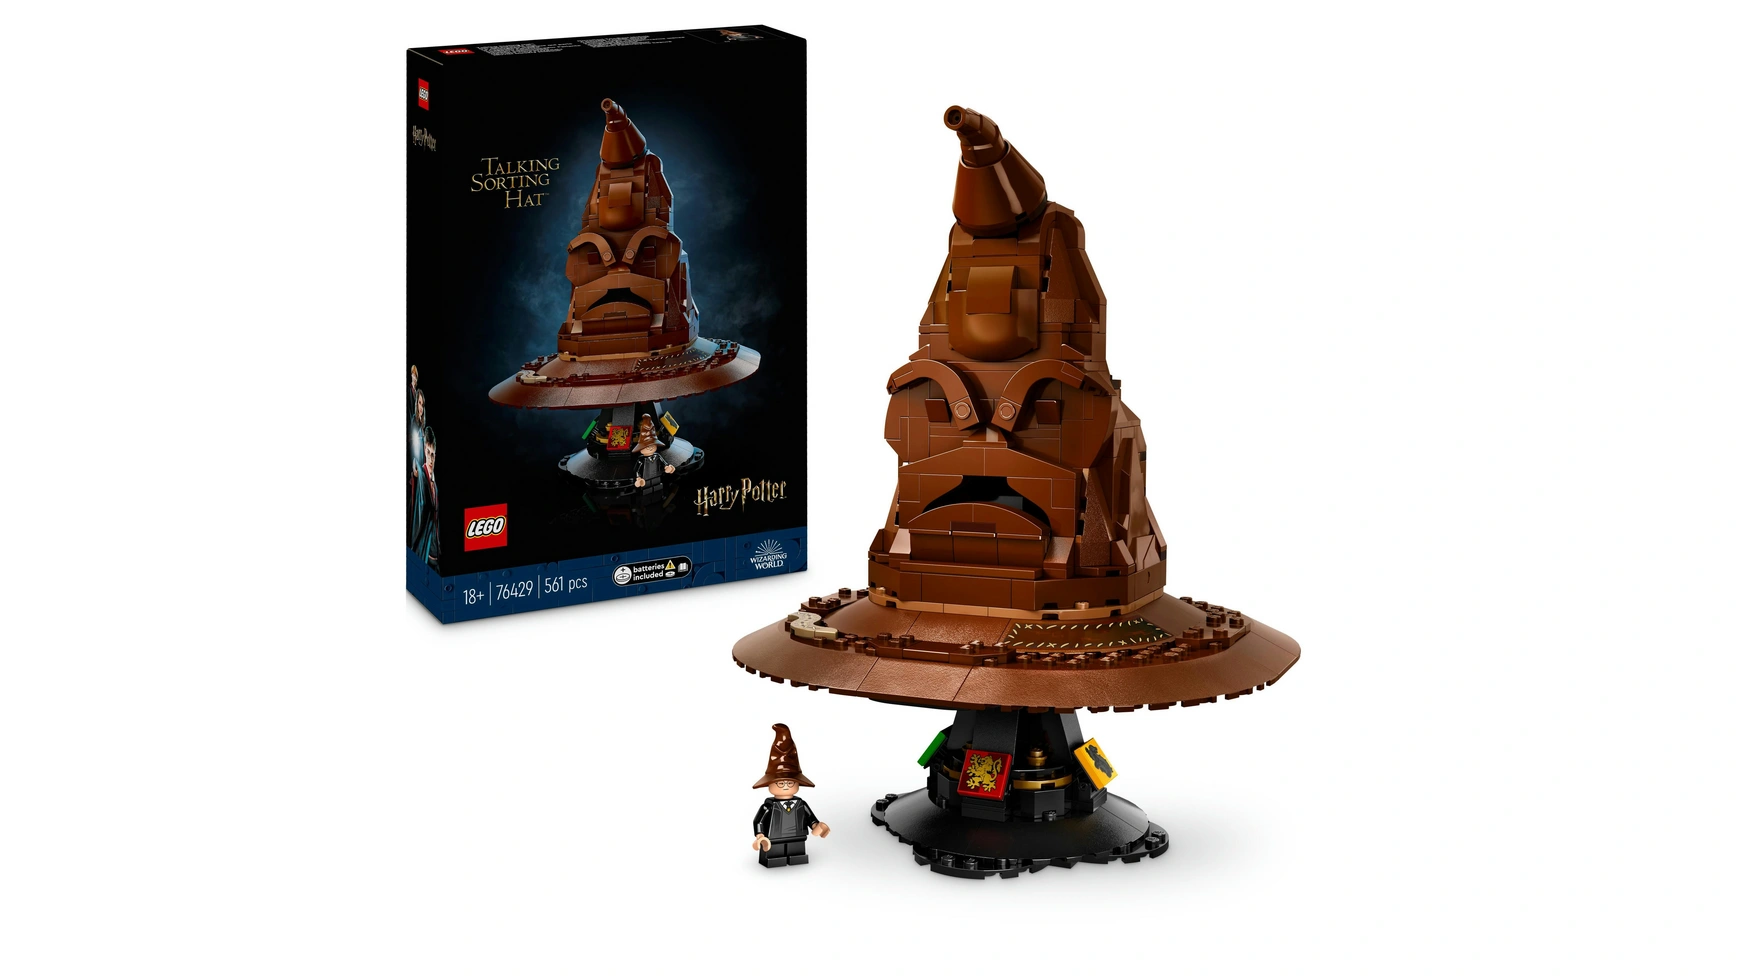 Lego Harry Potter Распределяющая шляпа Хогвартса макс фрай набор темная сторона макс фрай закладка harry potter распределяющая шляпа магнитная